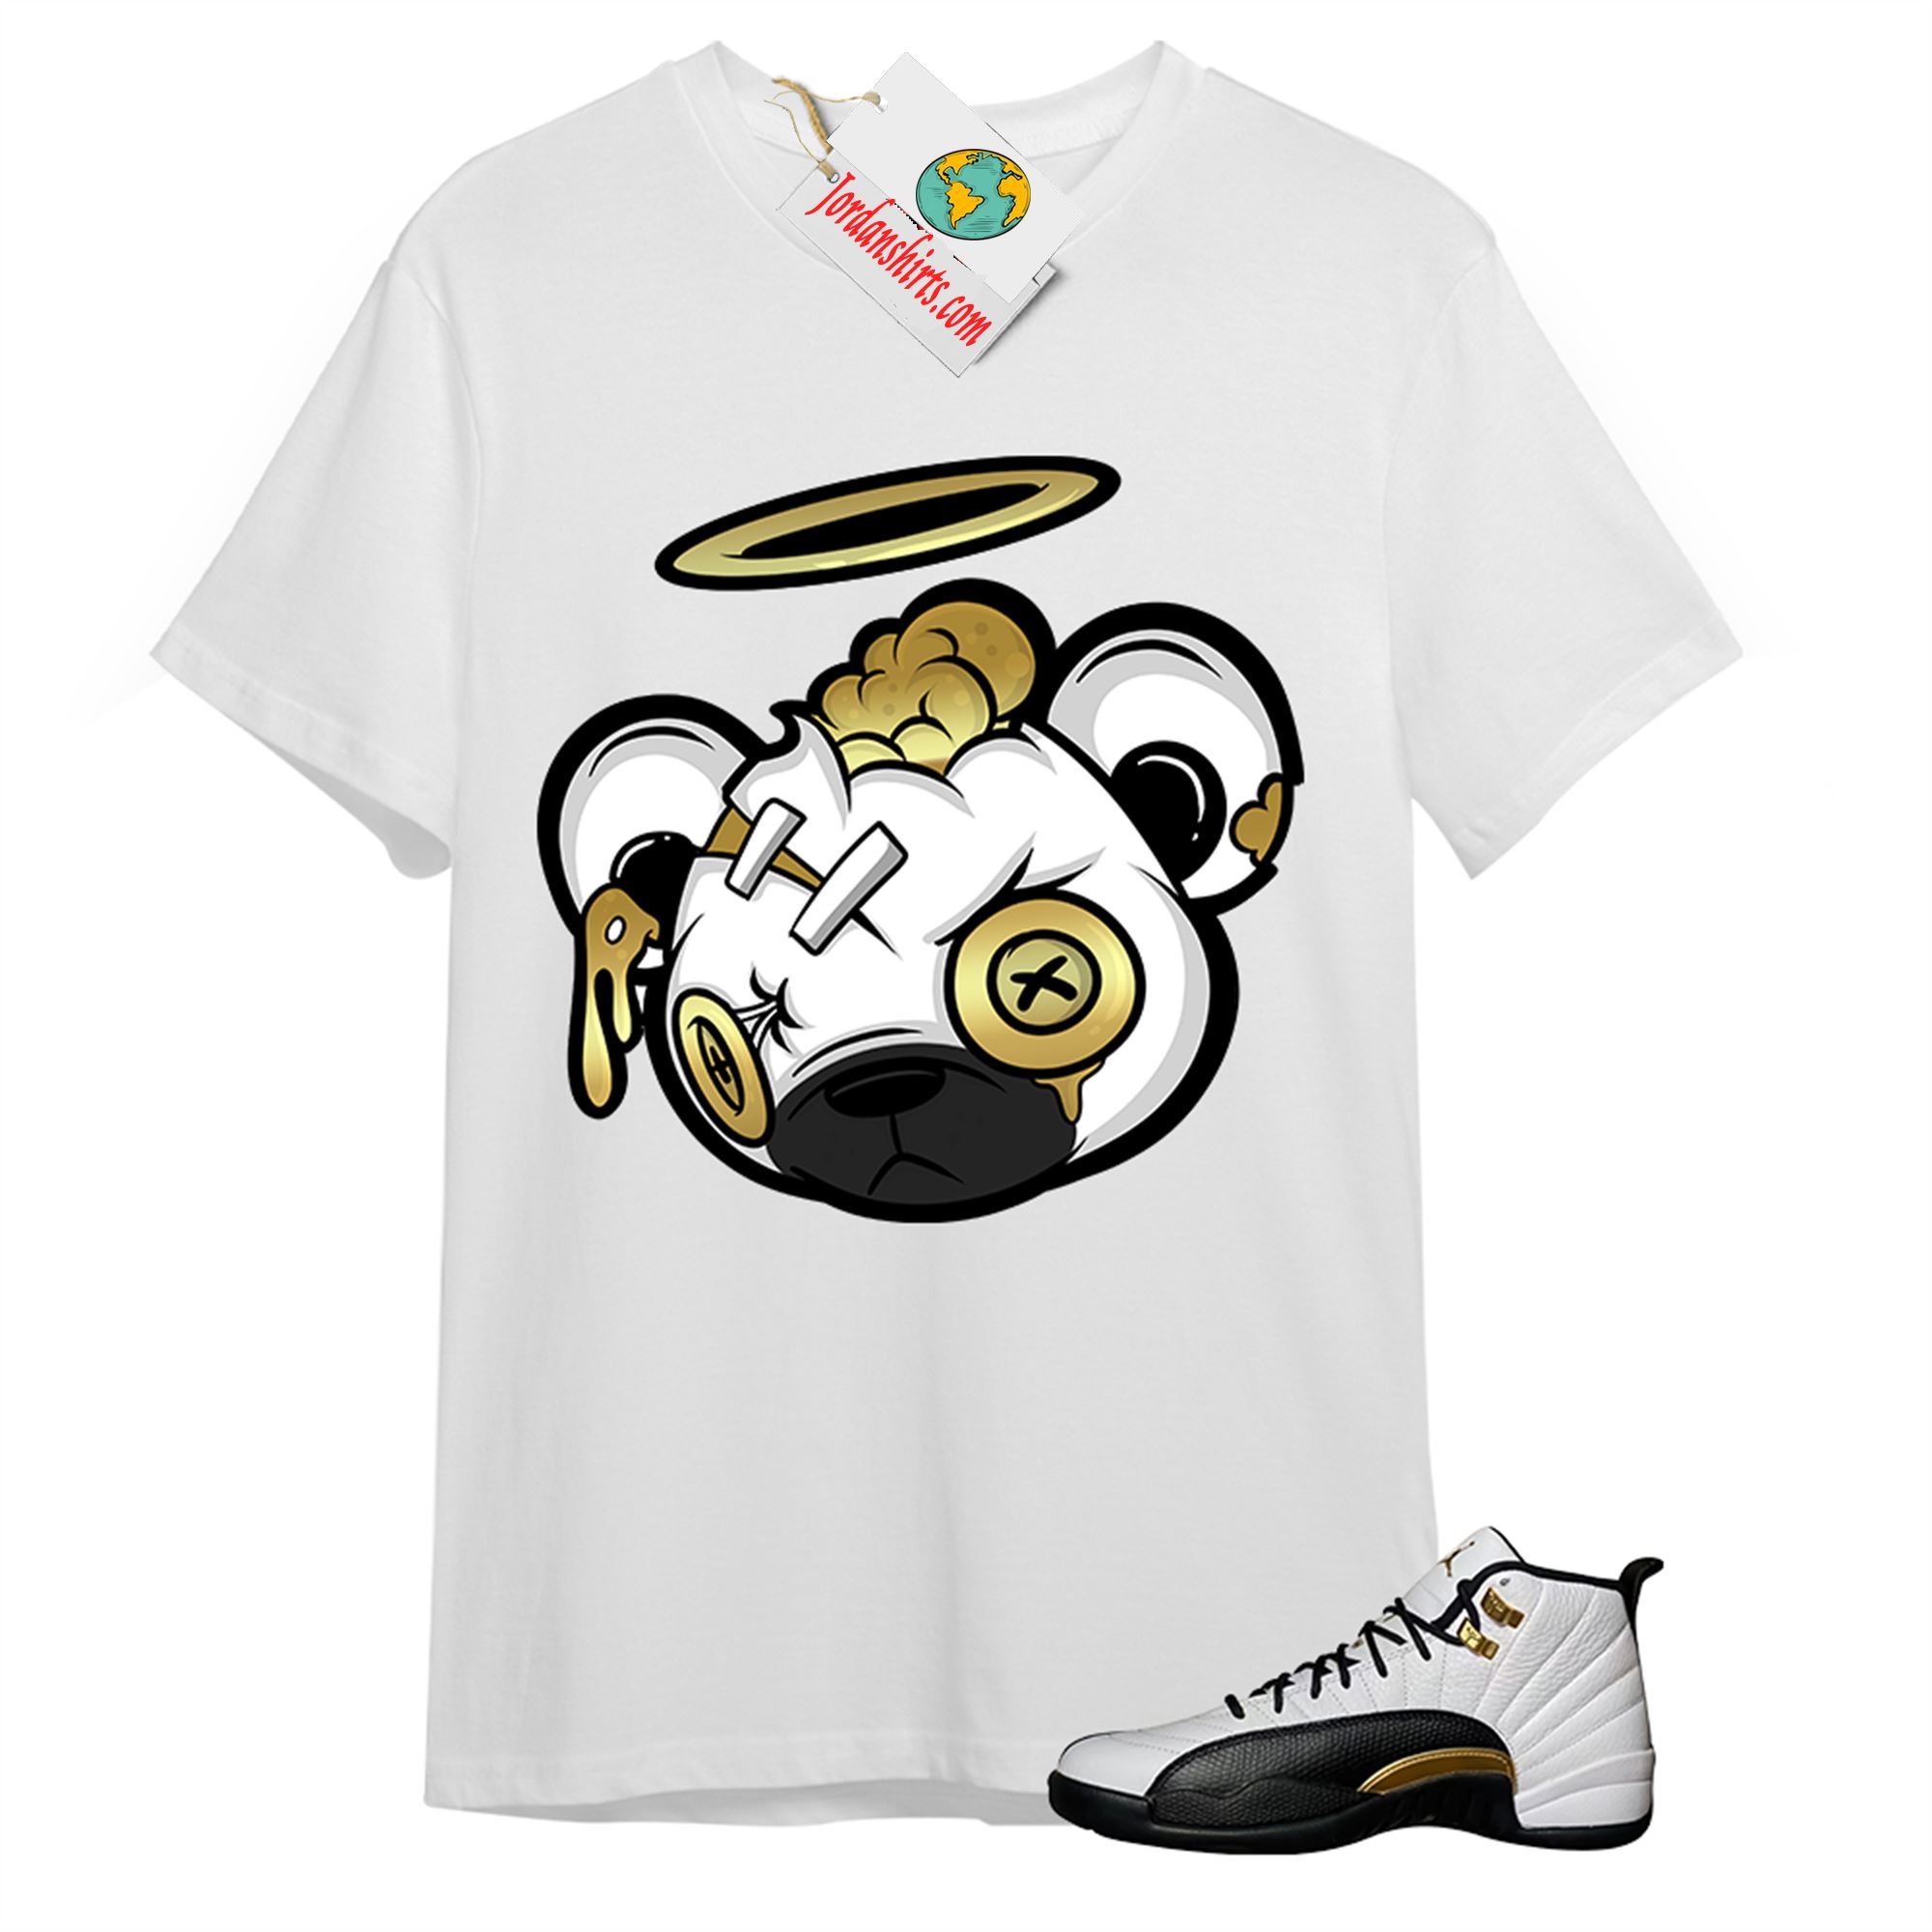 Jordan 12 Shirt, Halo Teddy White T-shirt Air Jordan 12 Royalty 12s Plus Size Up To 5xl